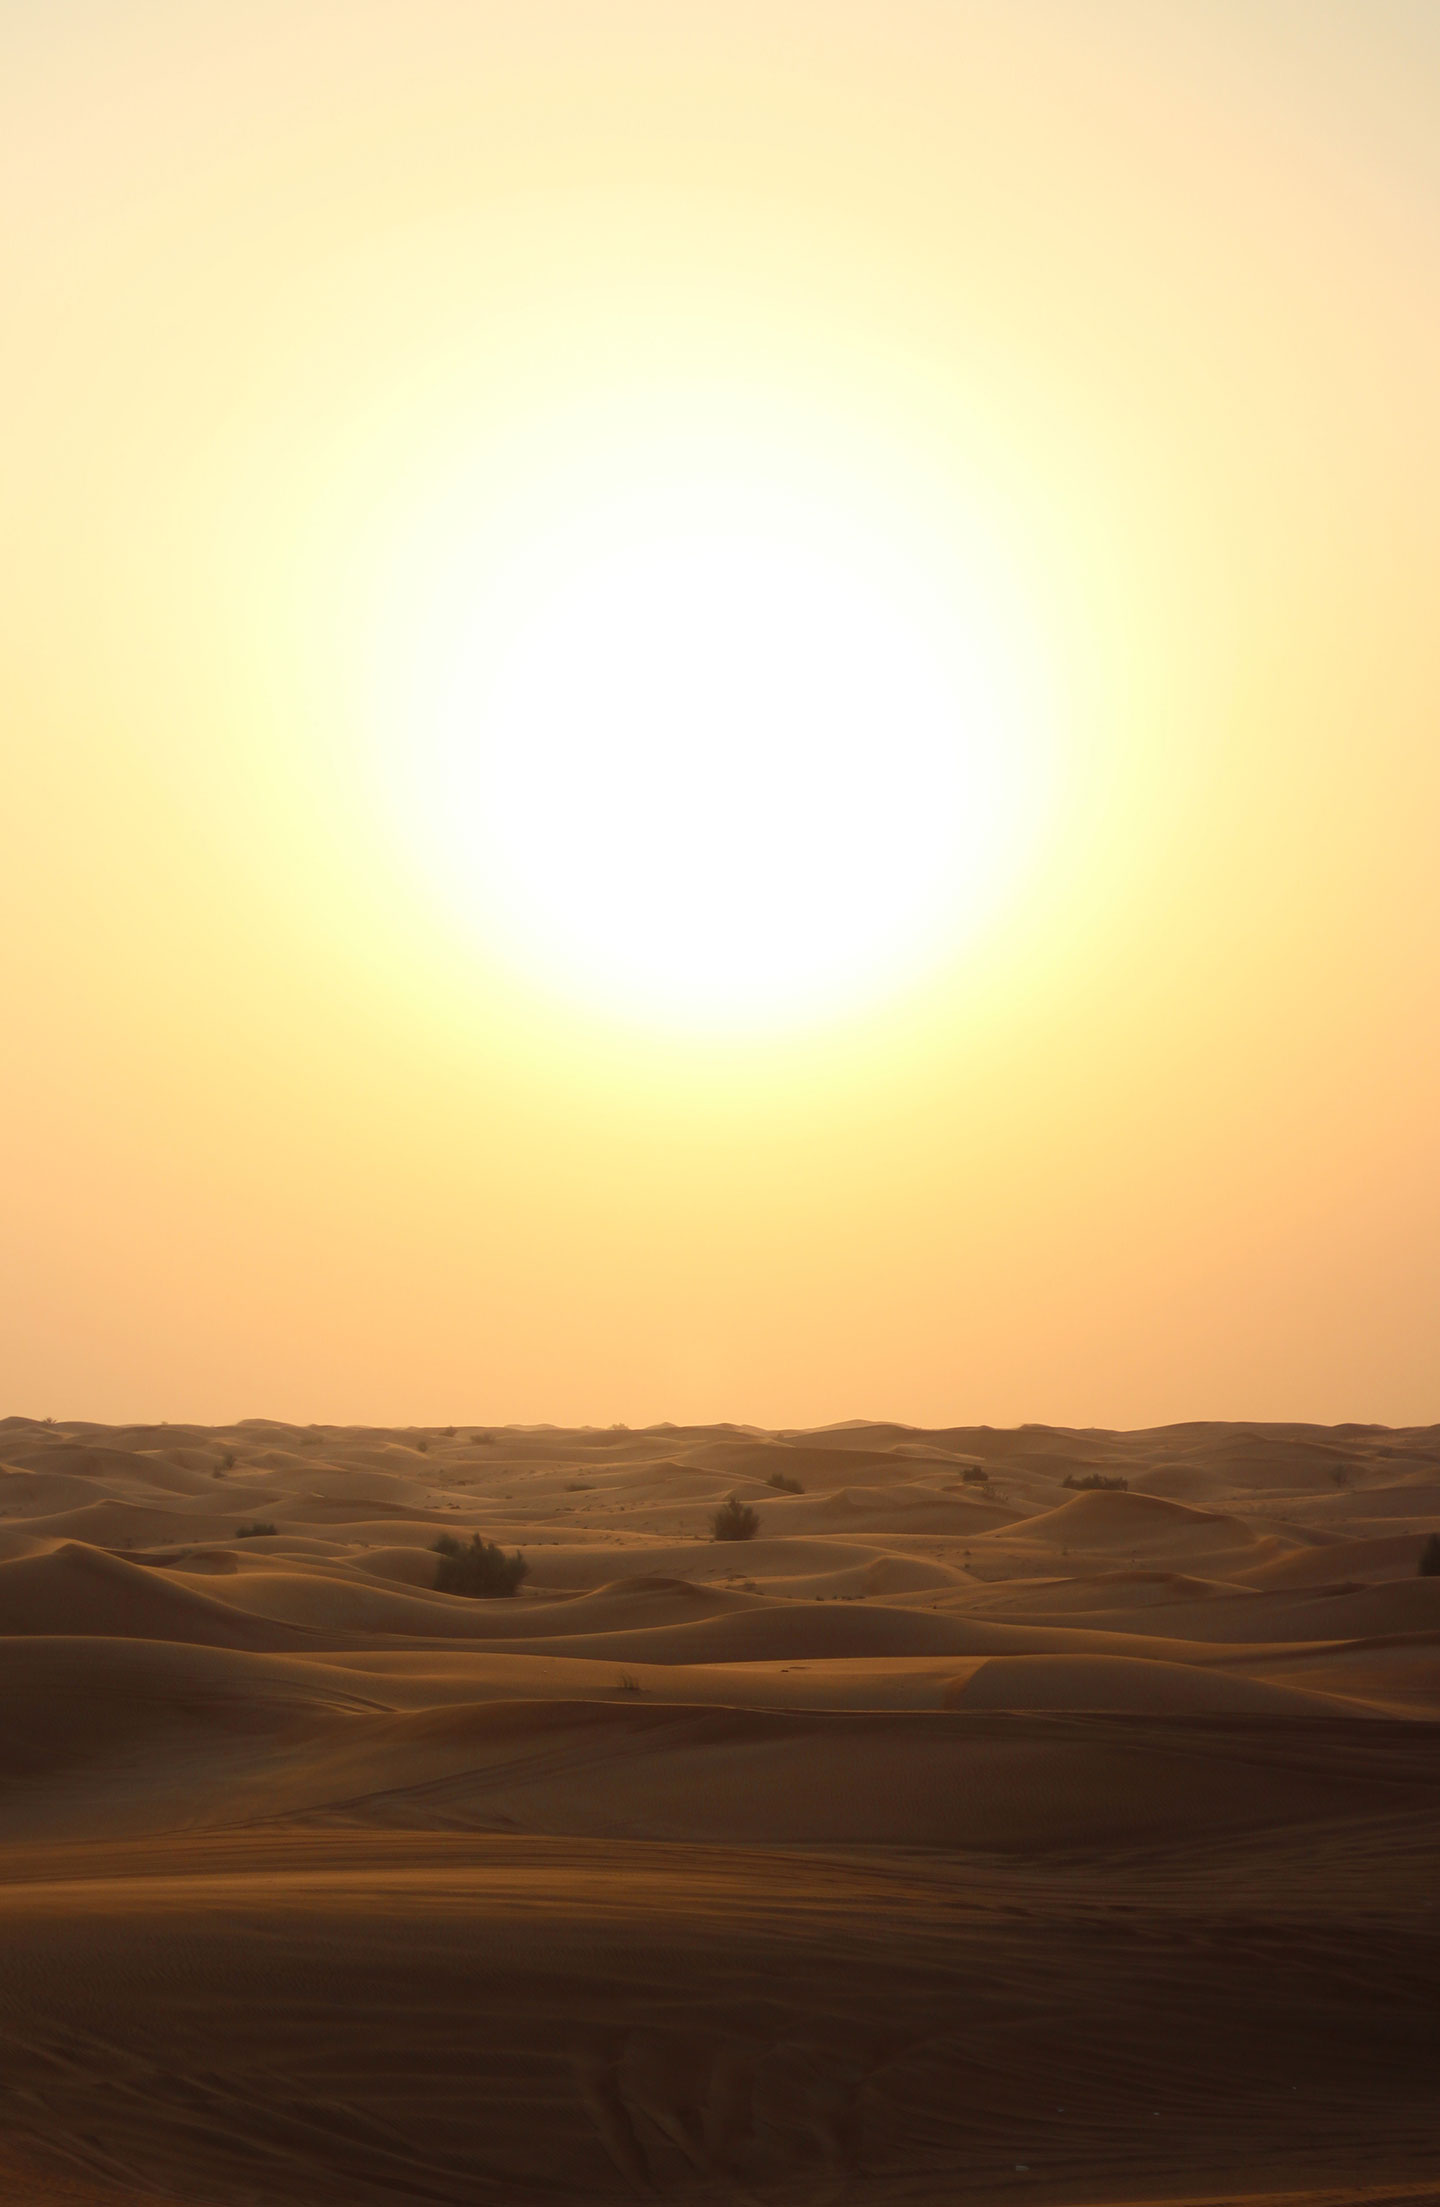 A desert scene with sun beating down